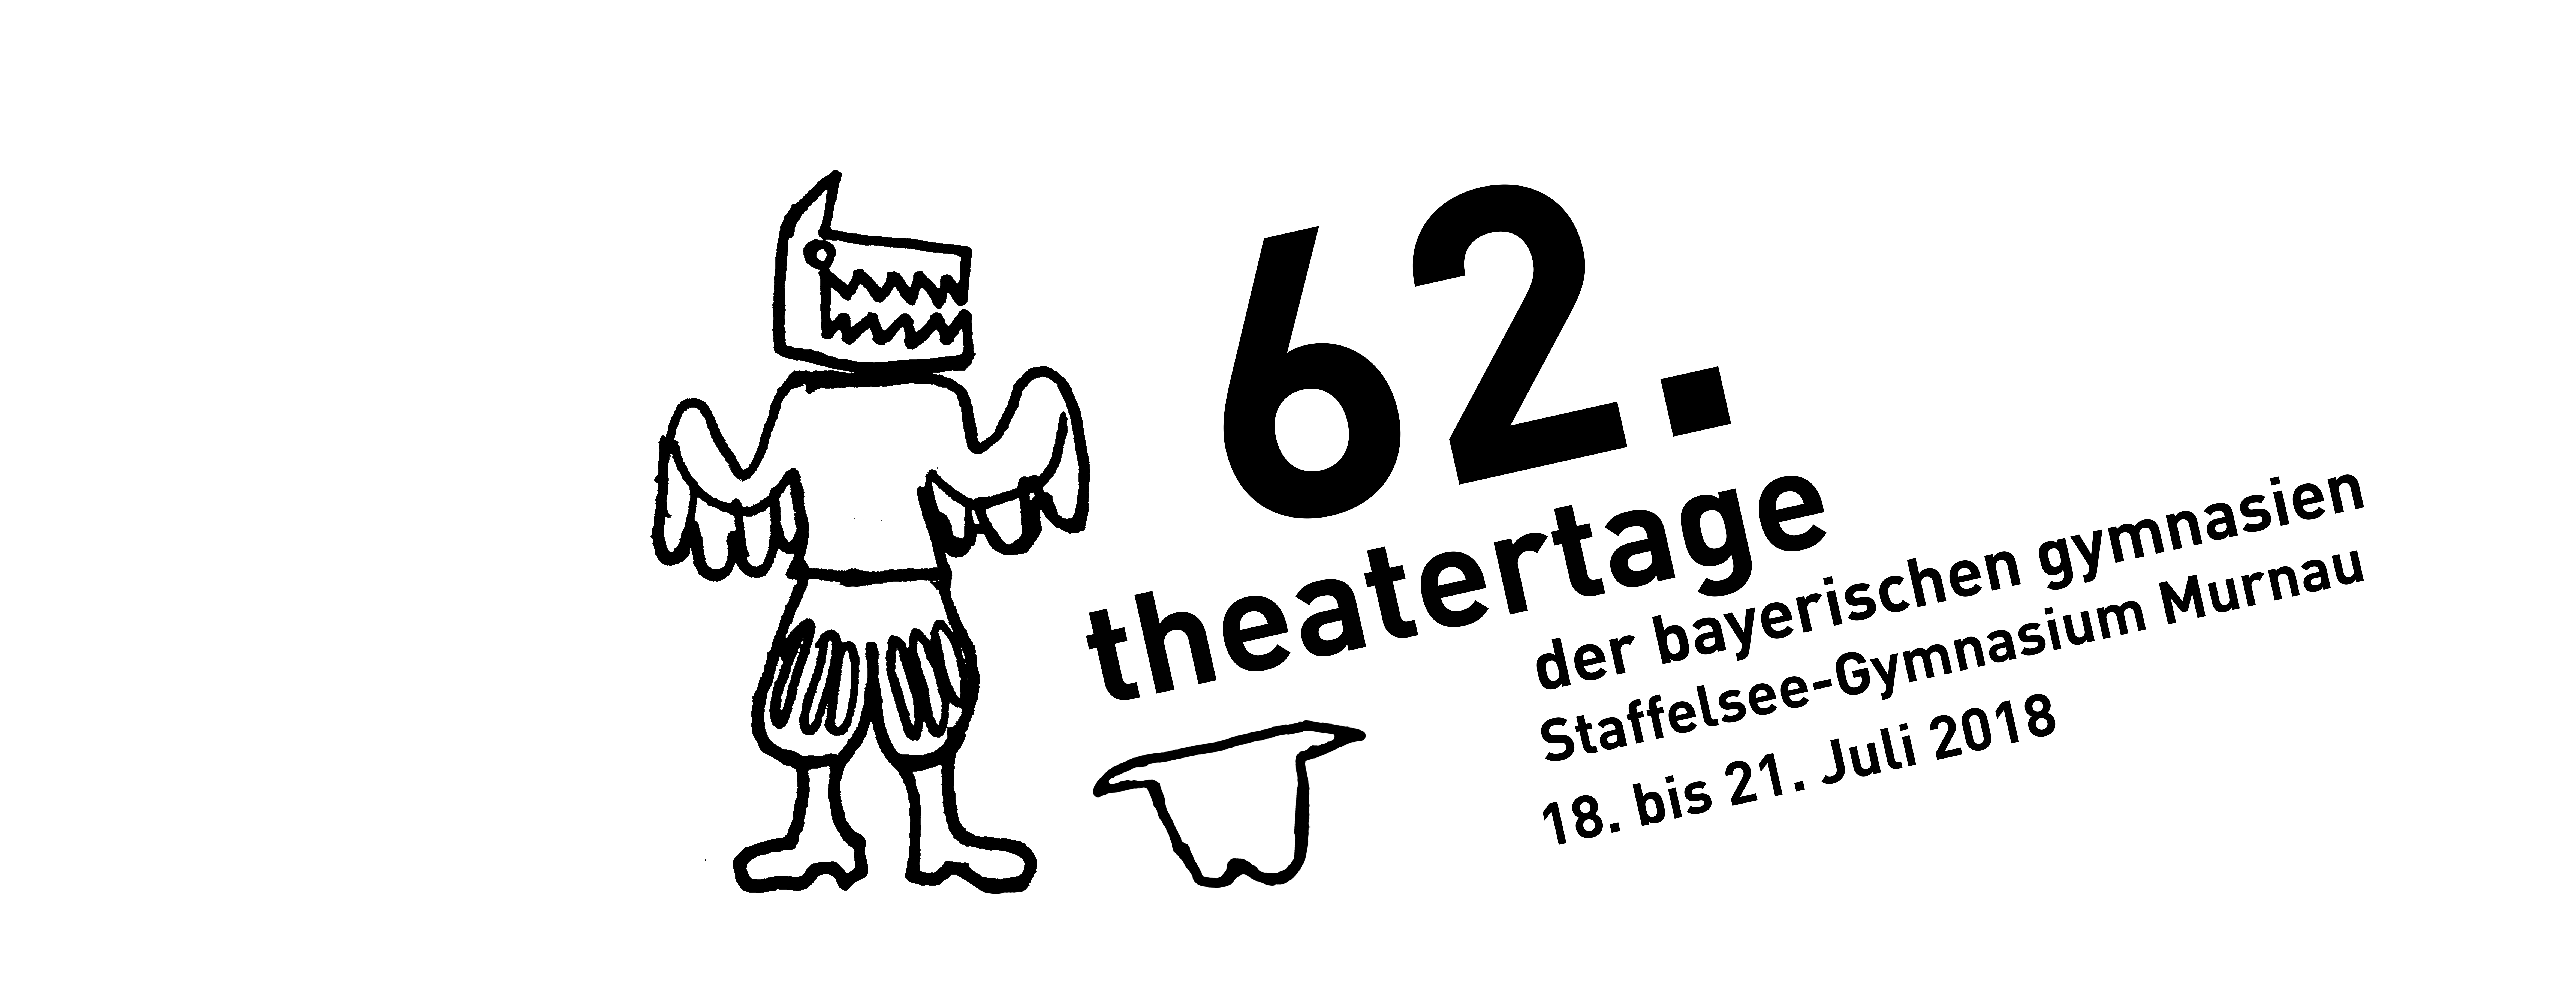 62 theatertage 2018_logo sw.jpg